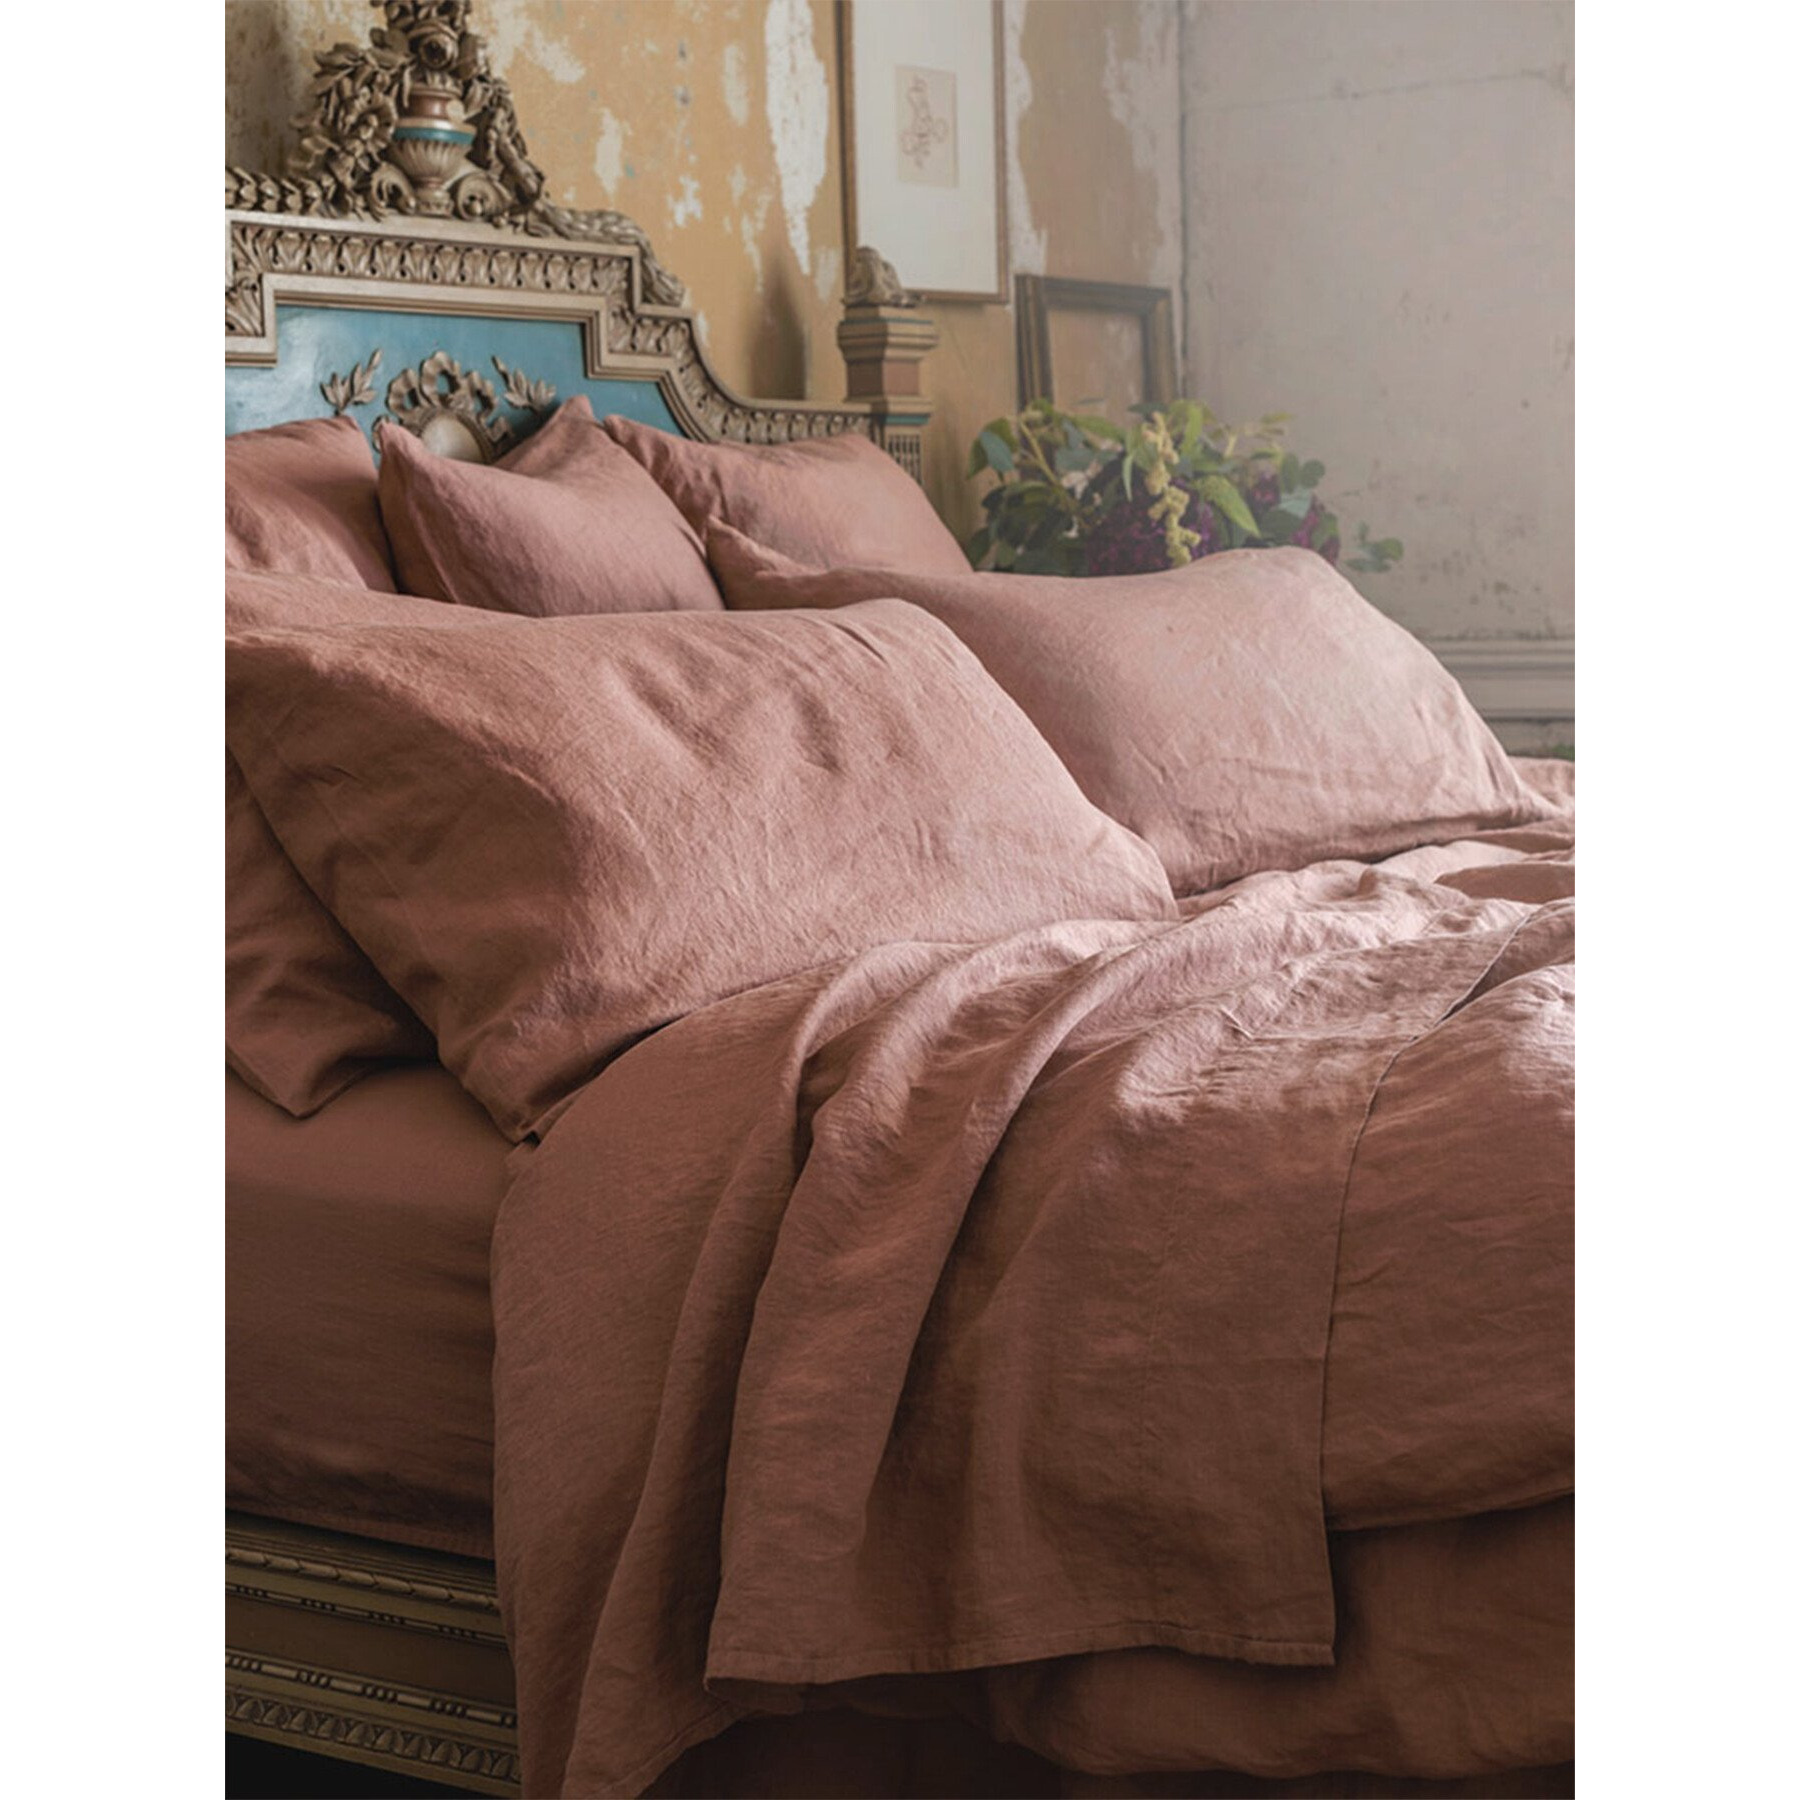 Piglet in Bed Linen Flat Sheet - Size Super King Tan - image 1